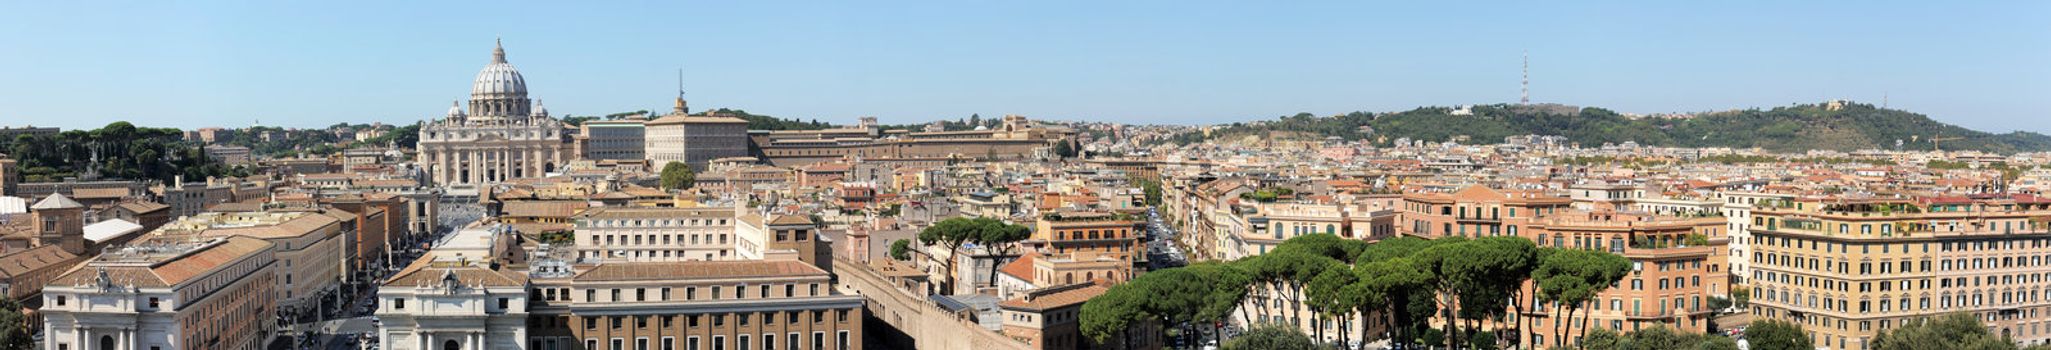 panorama of Rome and basilica Saint Peter